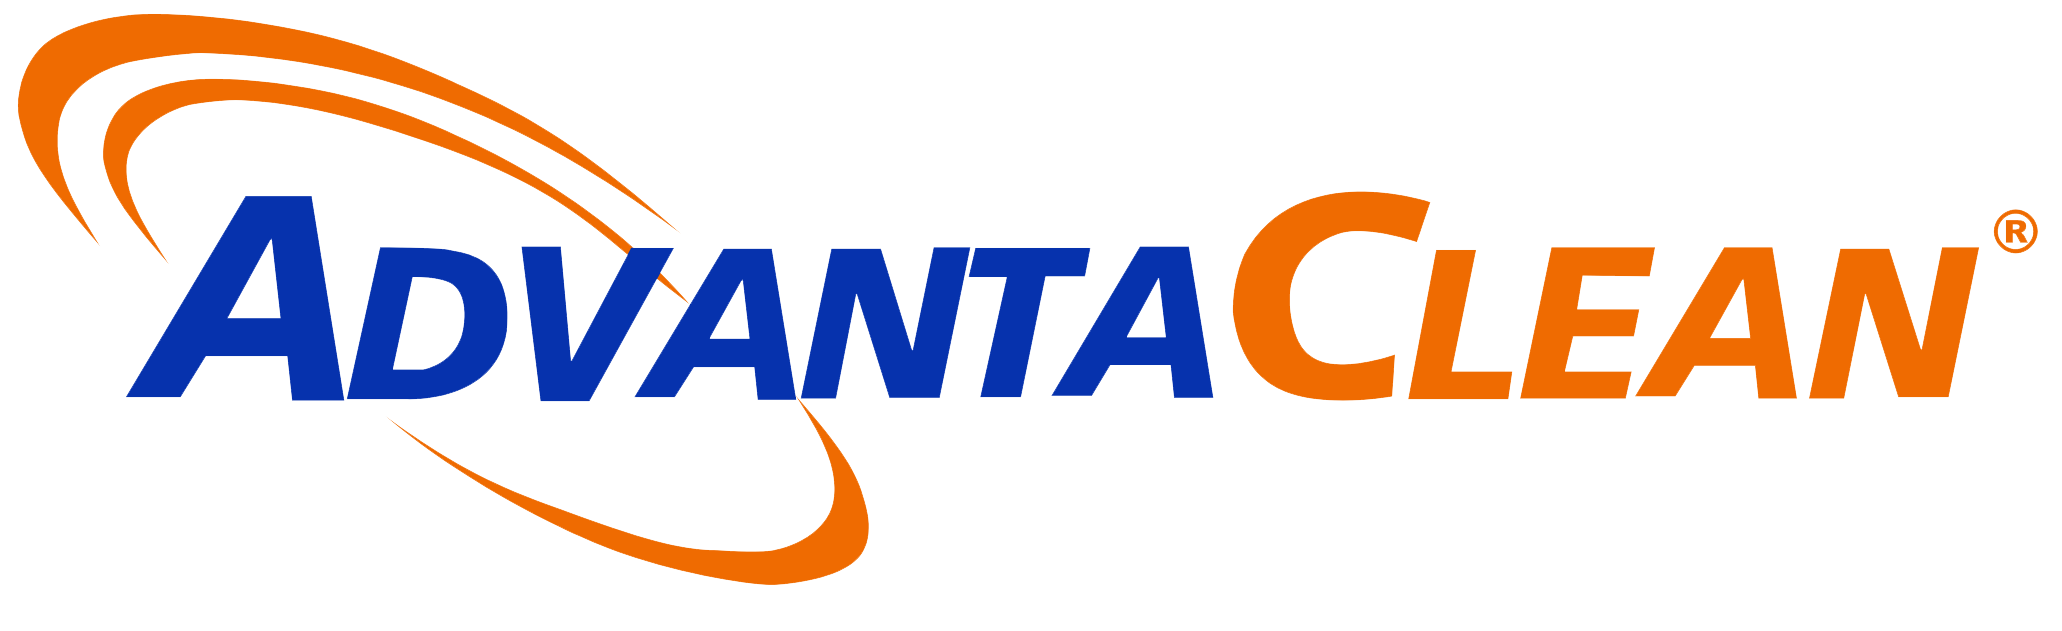 AdvantaClean of North Central Indiana Logo